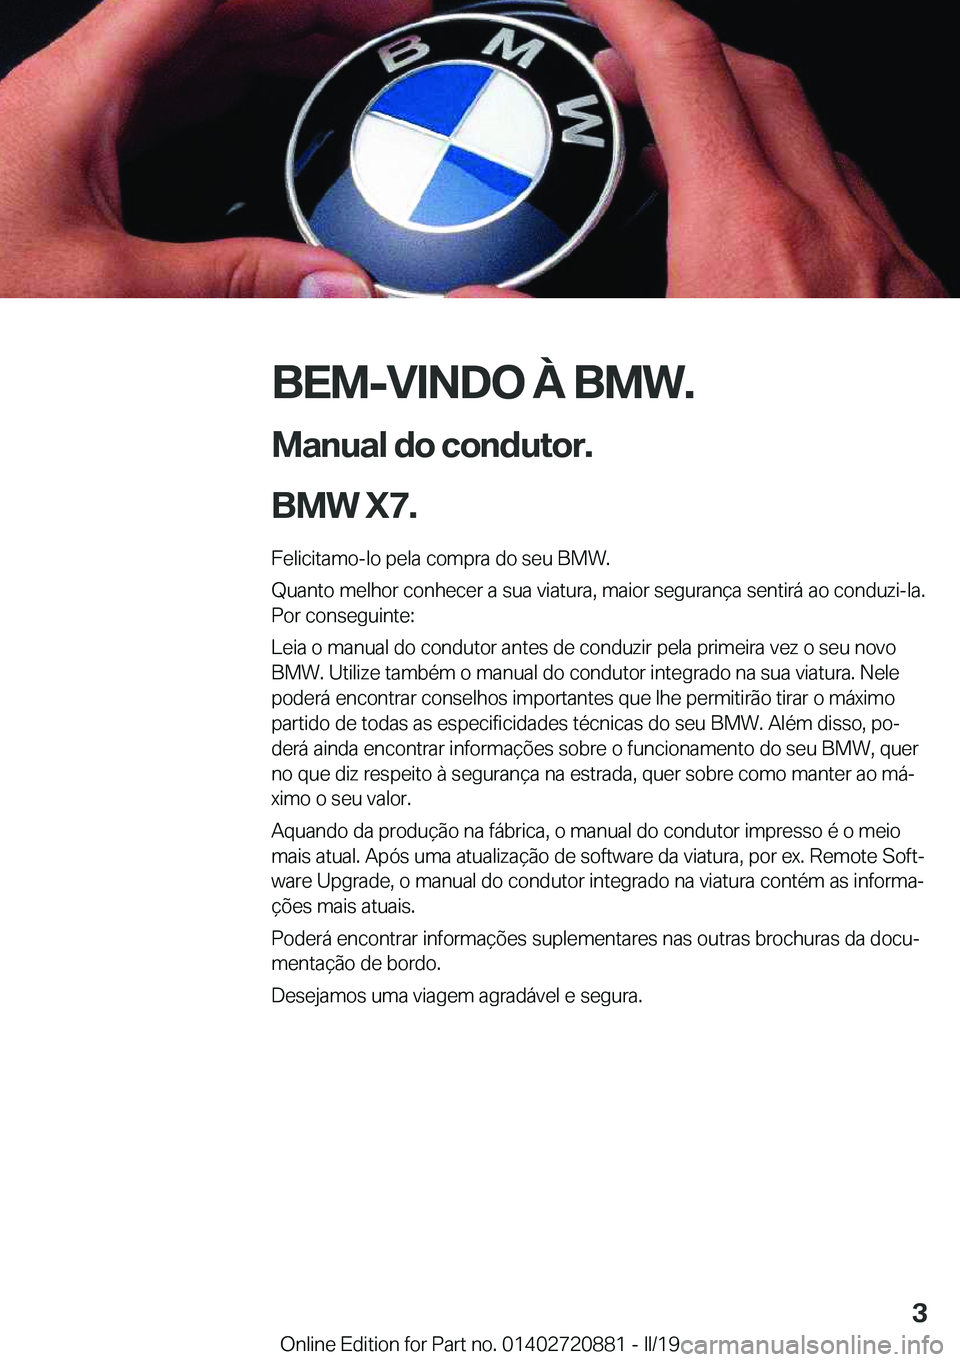 BMW X7 2019  Manual do condutor (in Portuguese) �B�E�M�-�V�I�N�D�O��À��B�M�W�.
�M�a�n�u�a�l��d�o��c�o�n�d�u�t�o�r�.
�B�M�W��X�7�. �F�e�l�i�c�i�t�a�m�o�-�l�o��p�e�l�a��c�o�m�p�r�a��d�o��s�e�u��B�M�W�.
�Q�u�a�n�t�o��m�e�l�h�o�r��c�o�n�h�